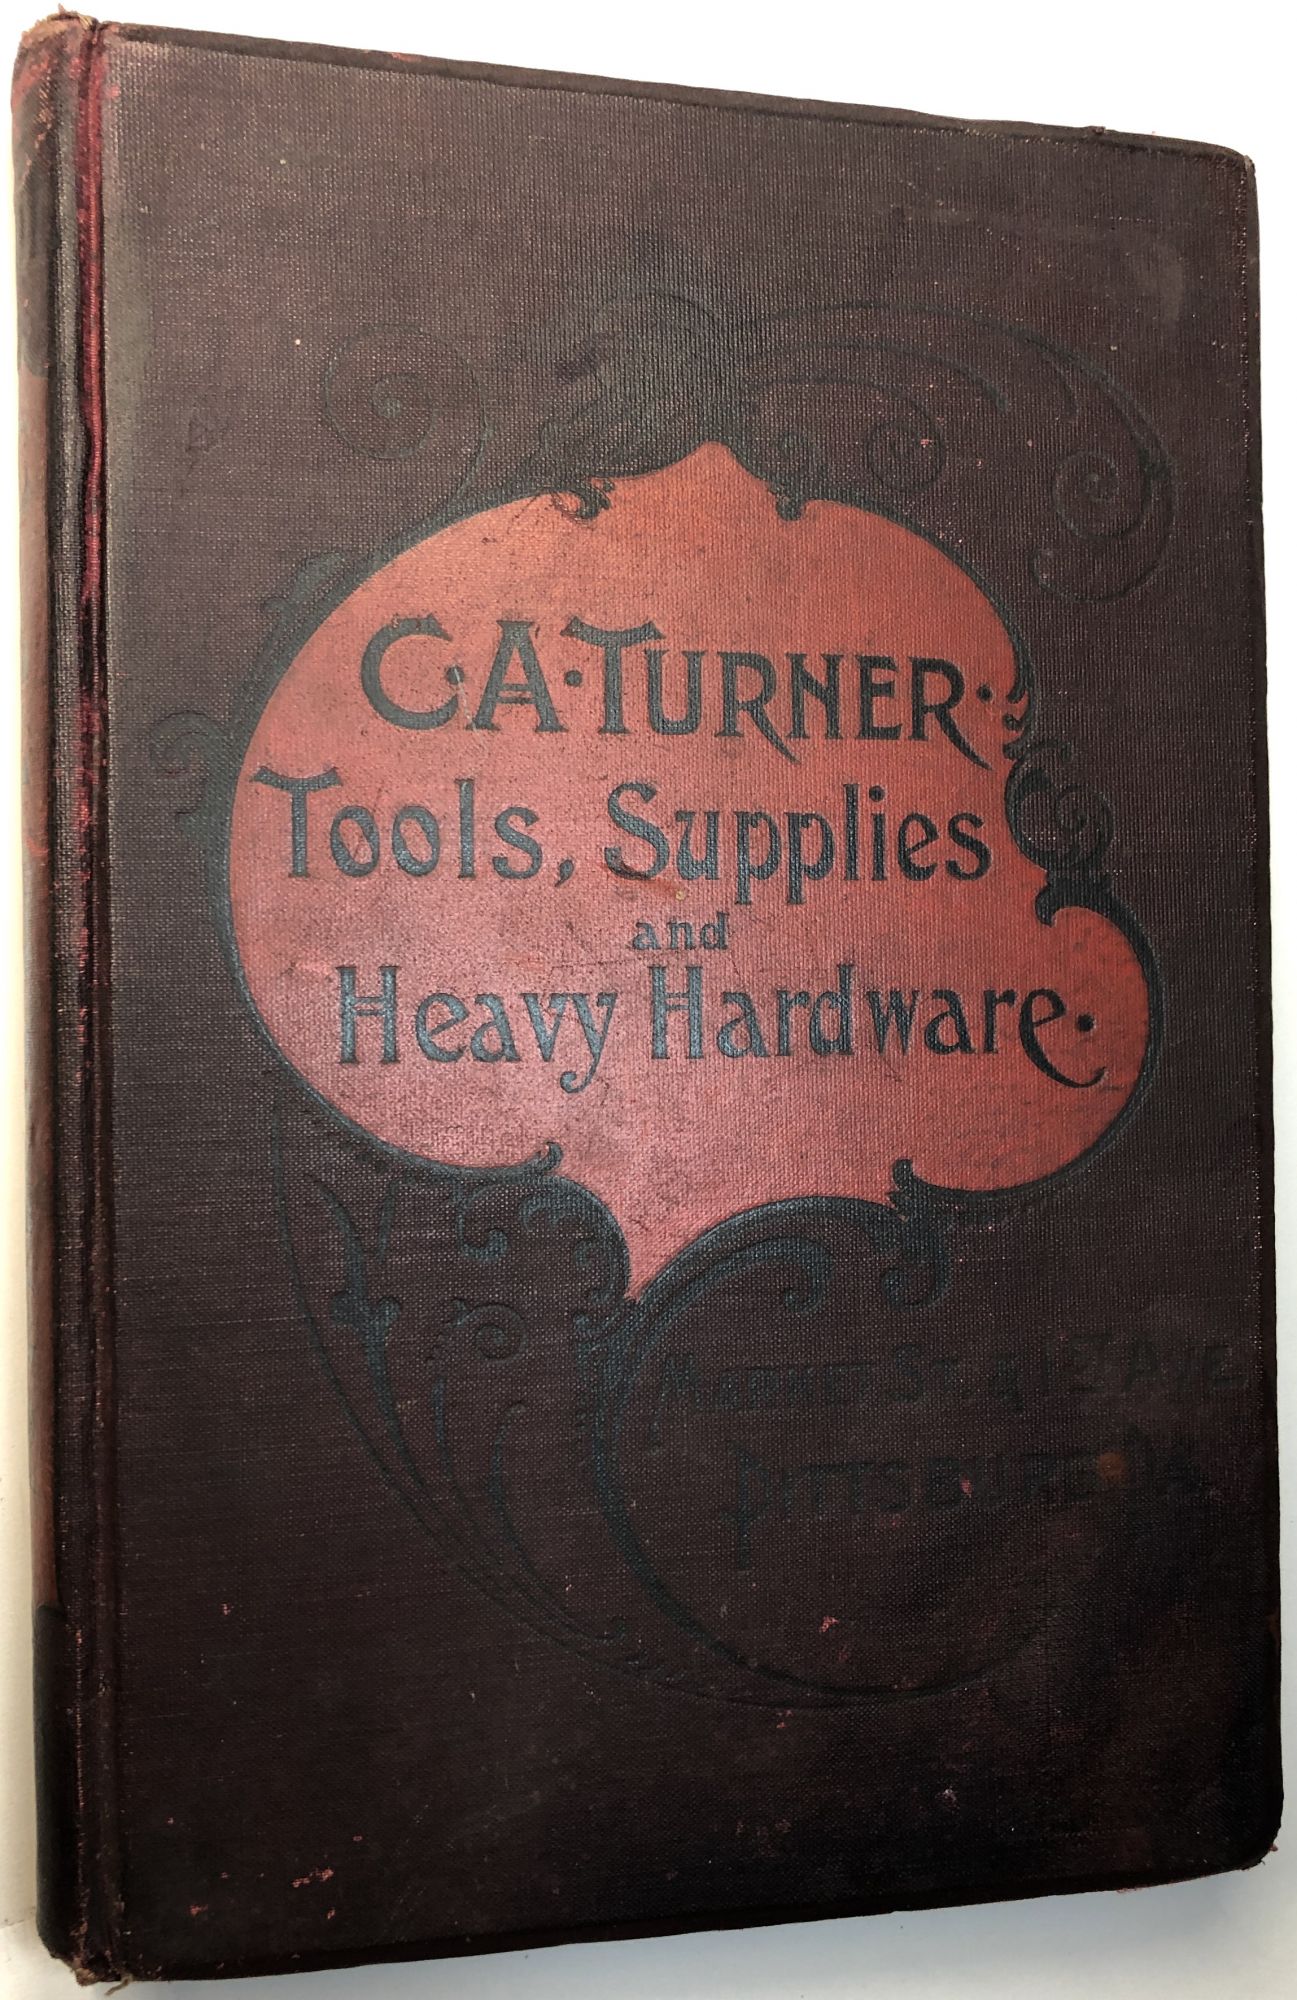 Hardware & Tools - Catalog